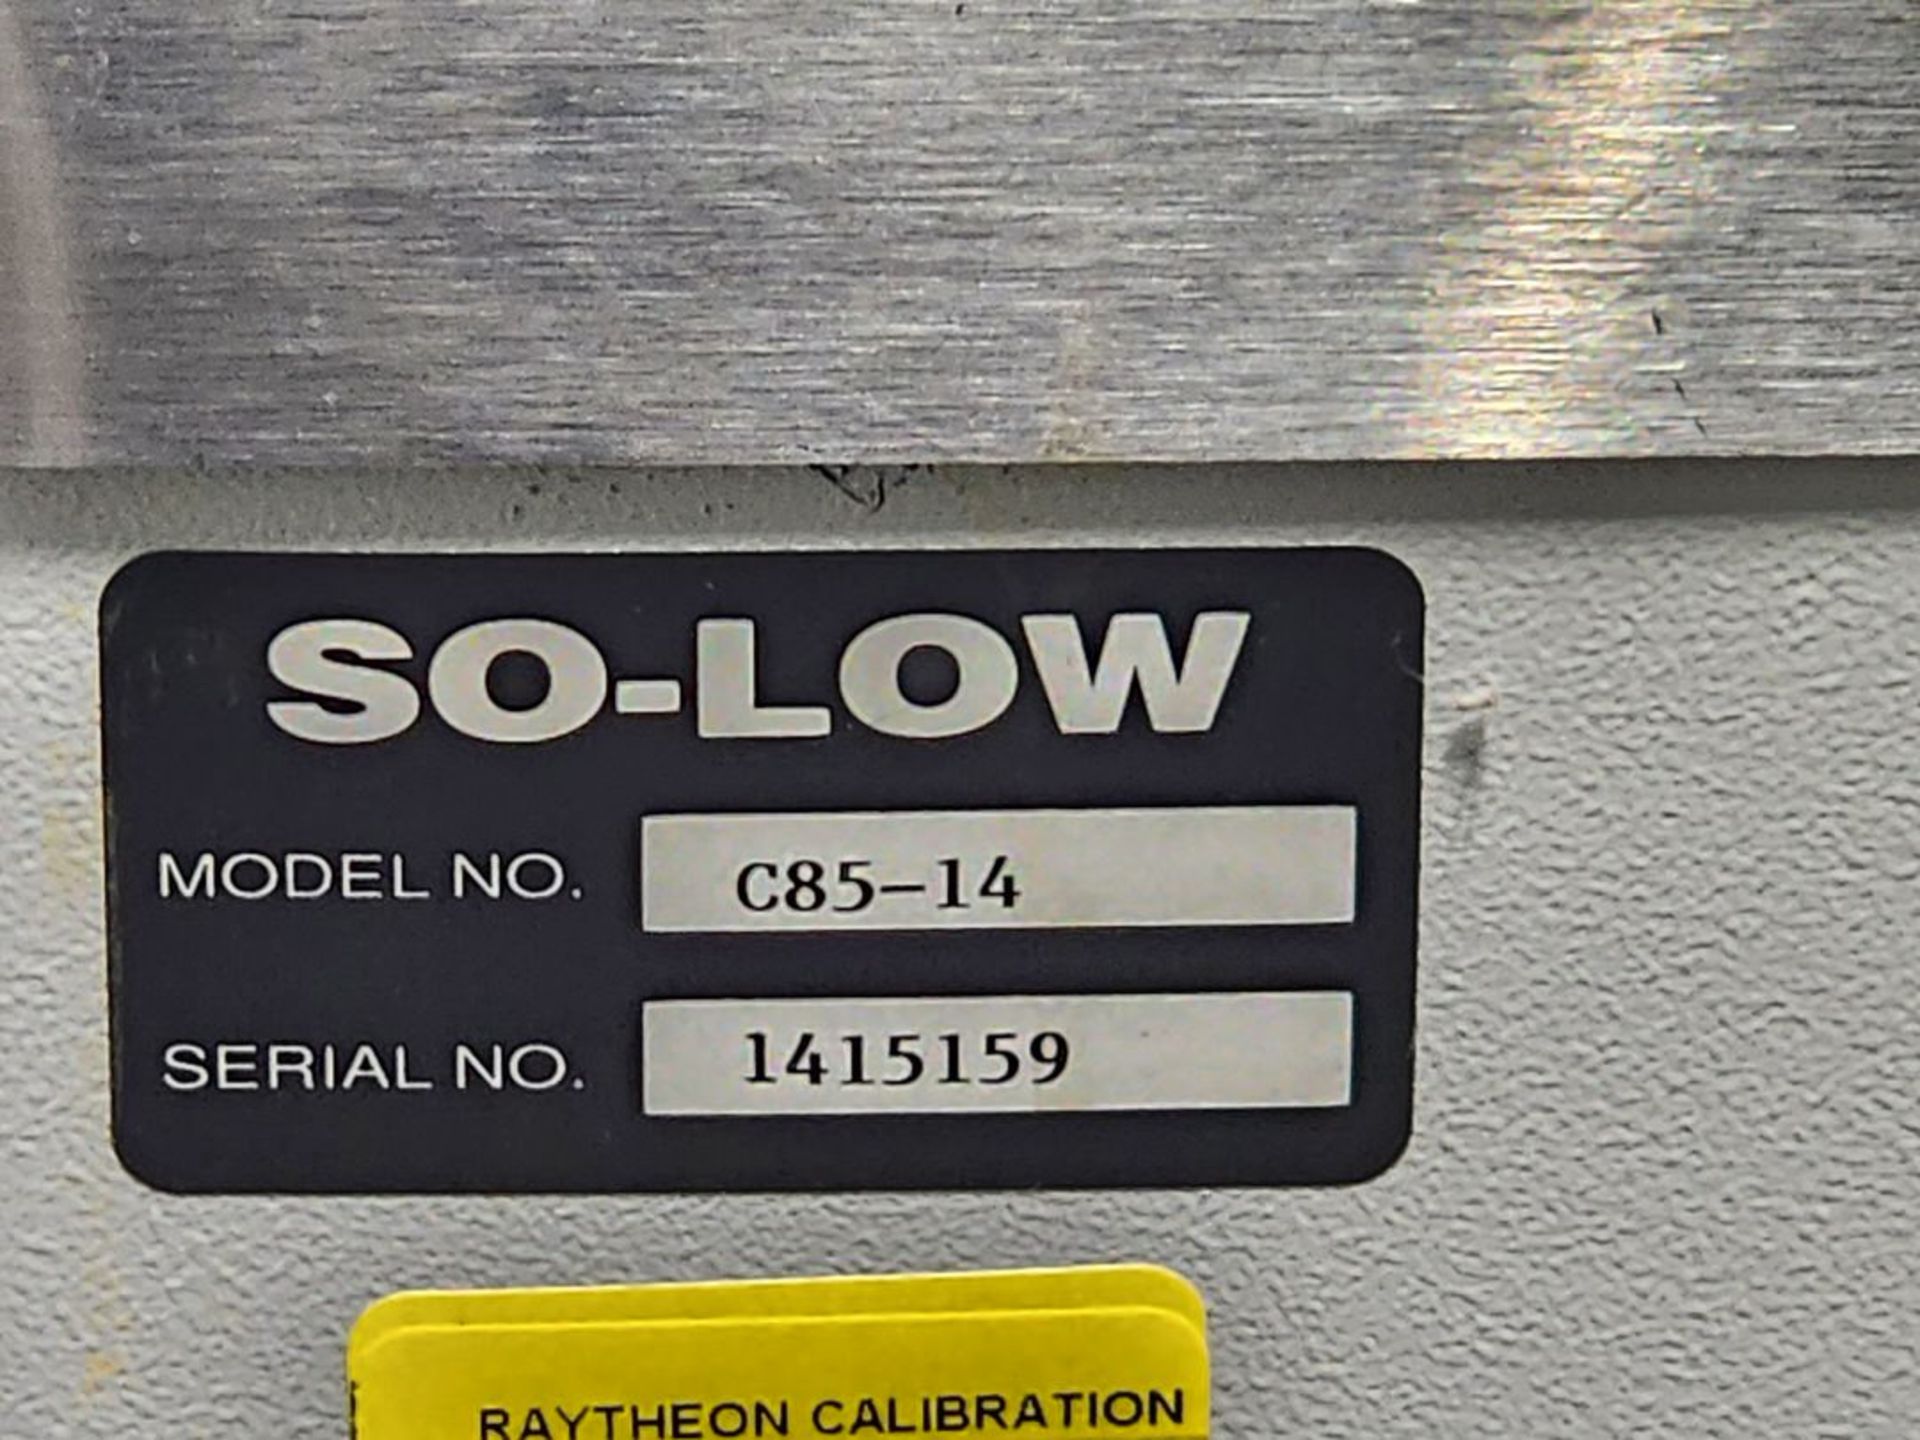 So-Low C85-14 Ultra-Low Freezer - Image 6 of 6